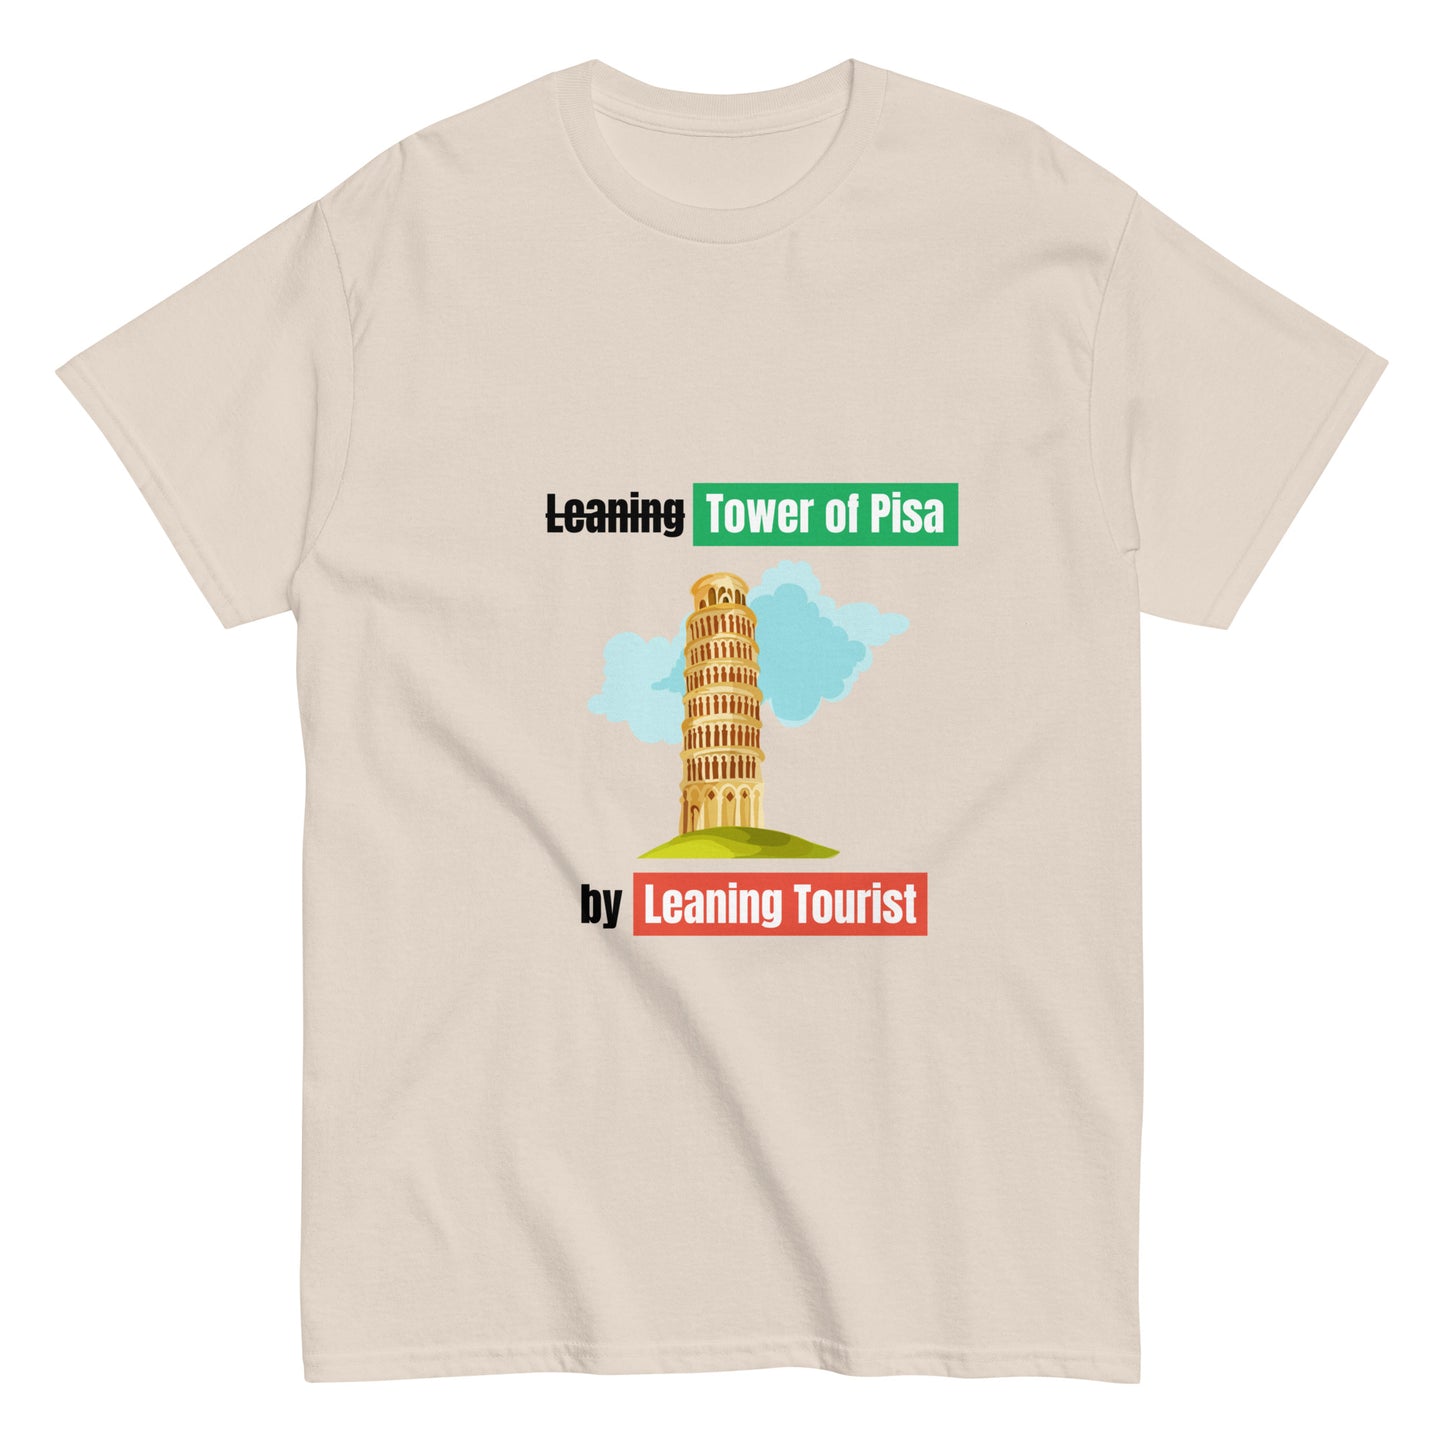 Pisa Humorous T-shirt, Landmark, Italian, Funny, Witty, Tourist, Travel jokes, Dad jokes, Tower of Pisa, Witty perspective, Unisex, Building